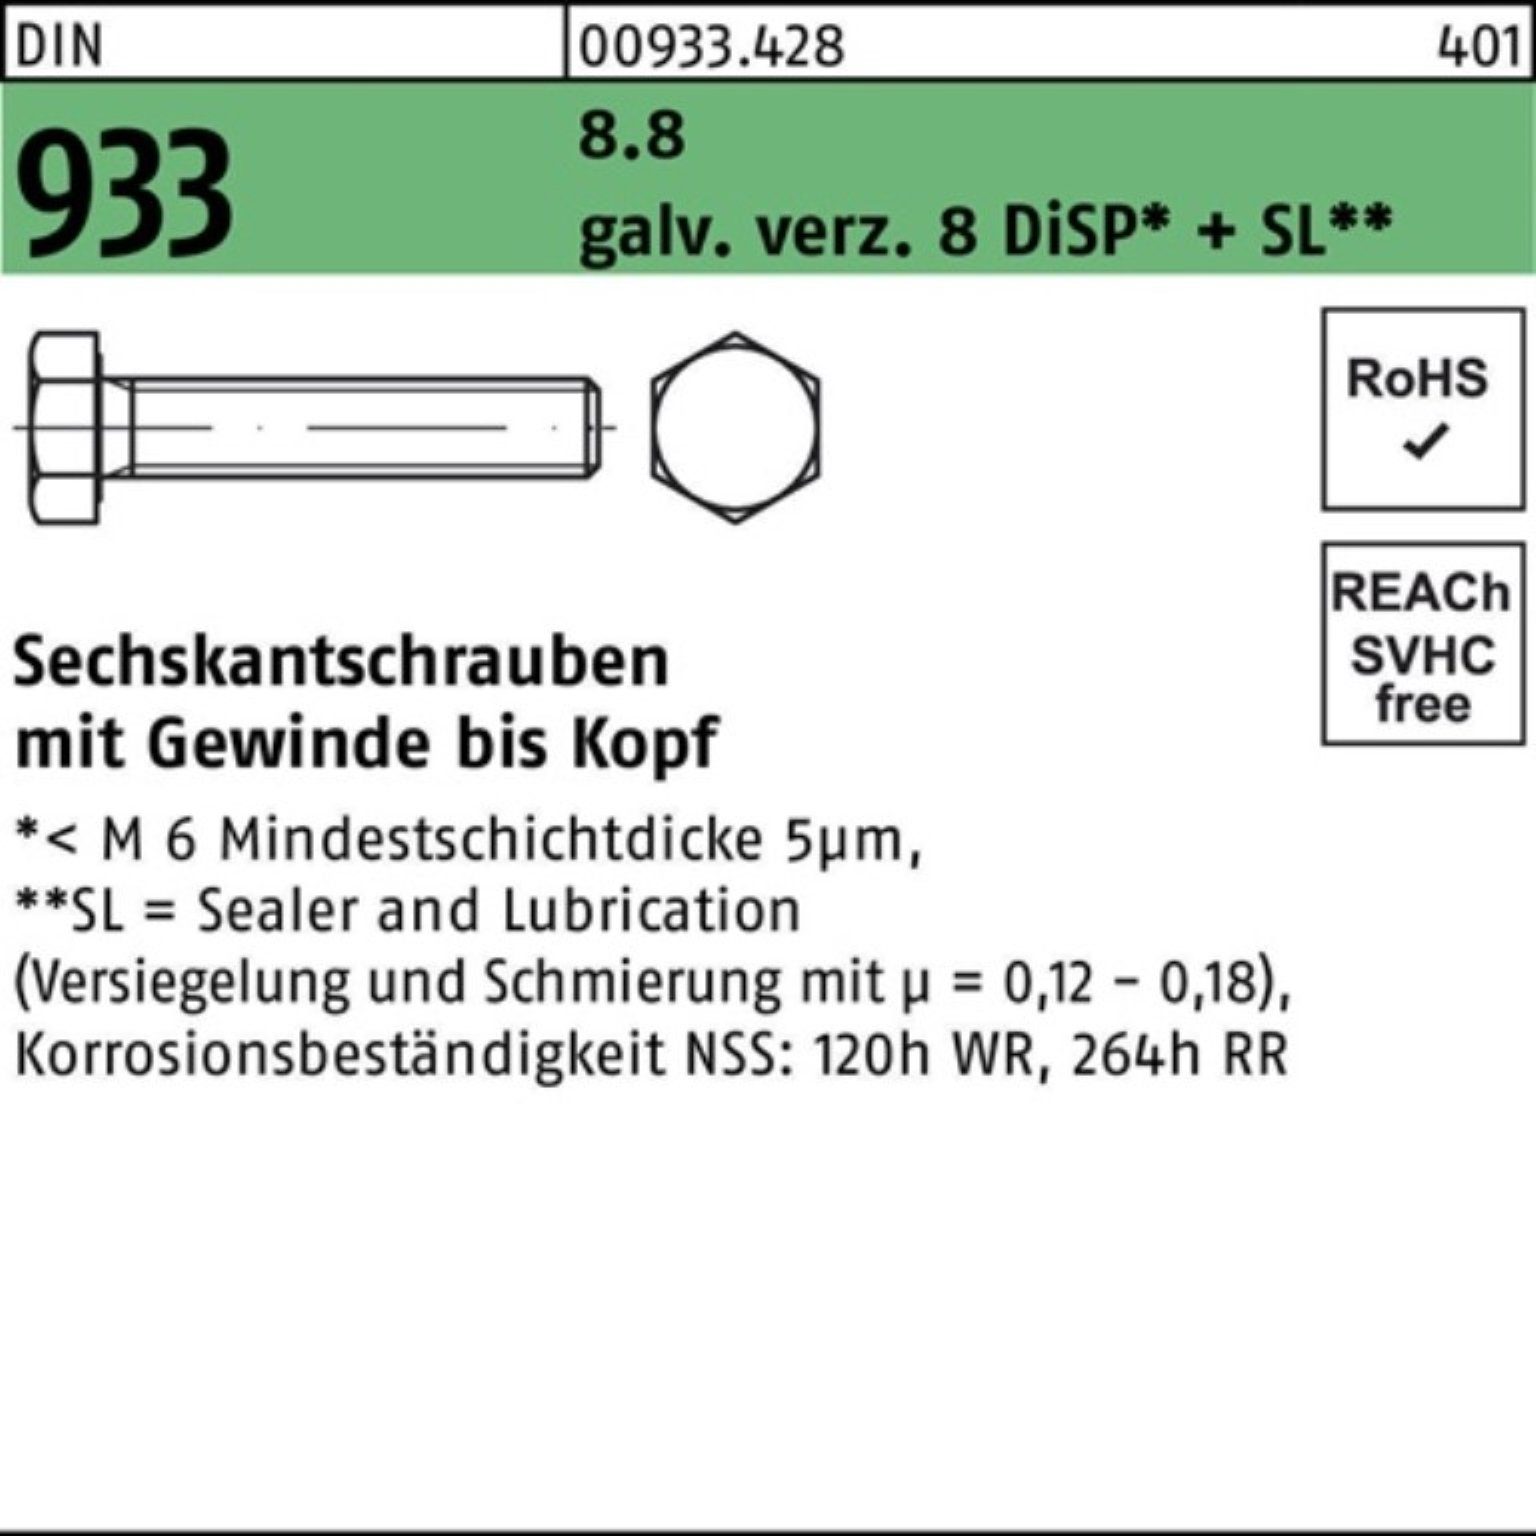 Reyher Sechskantschraube 200er Pack 933 SL + 8.8 DiSP Zn Sechskantschraube 10 VG DIN gal M8x 8